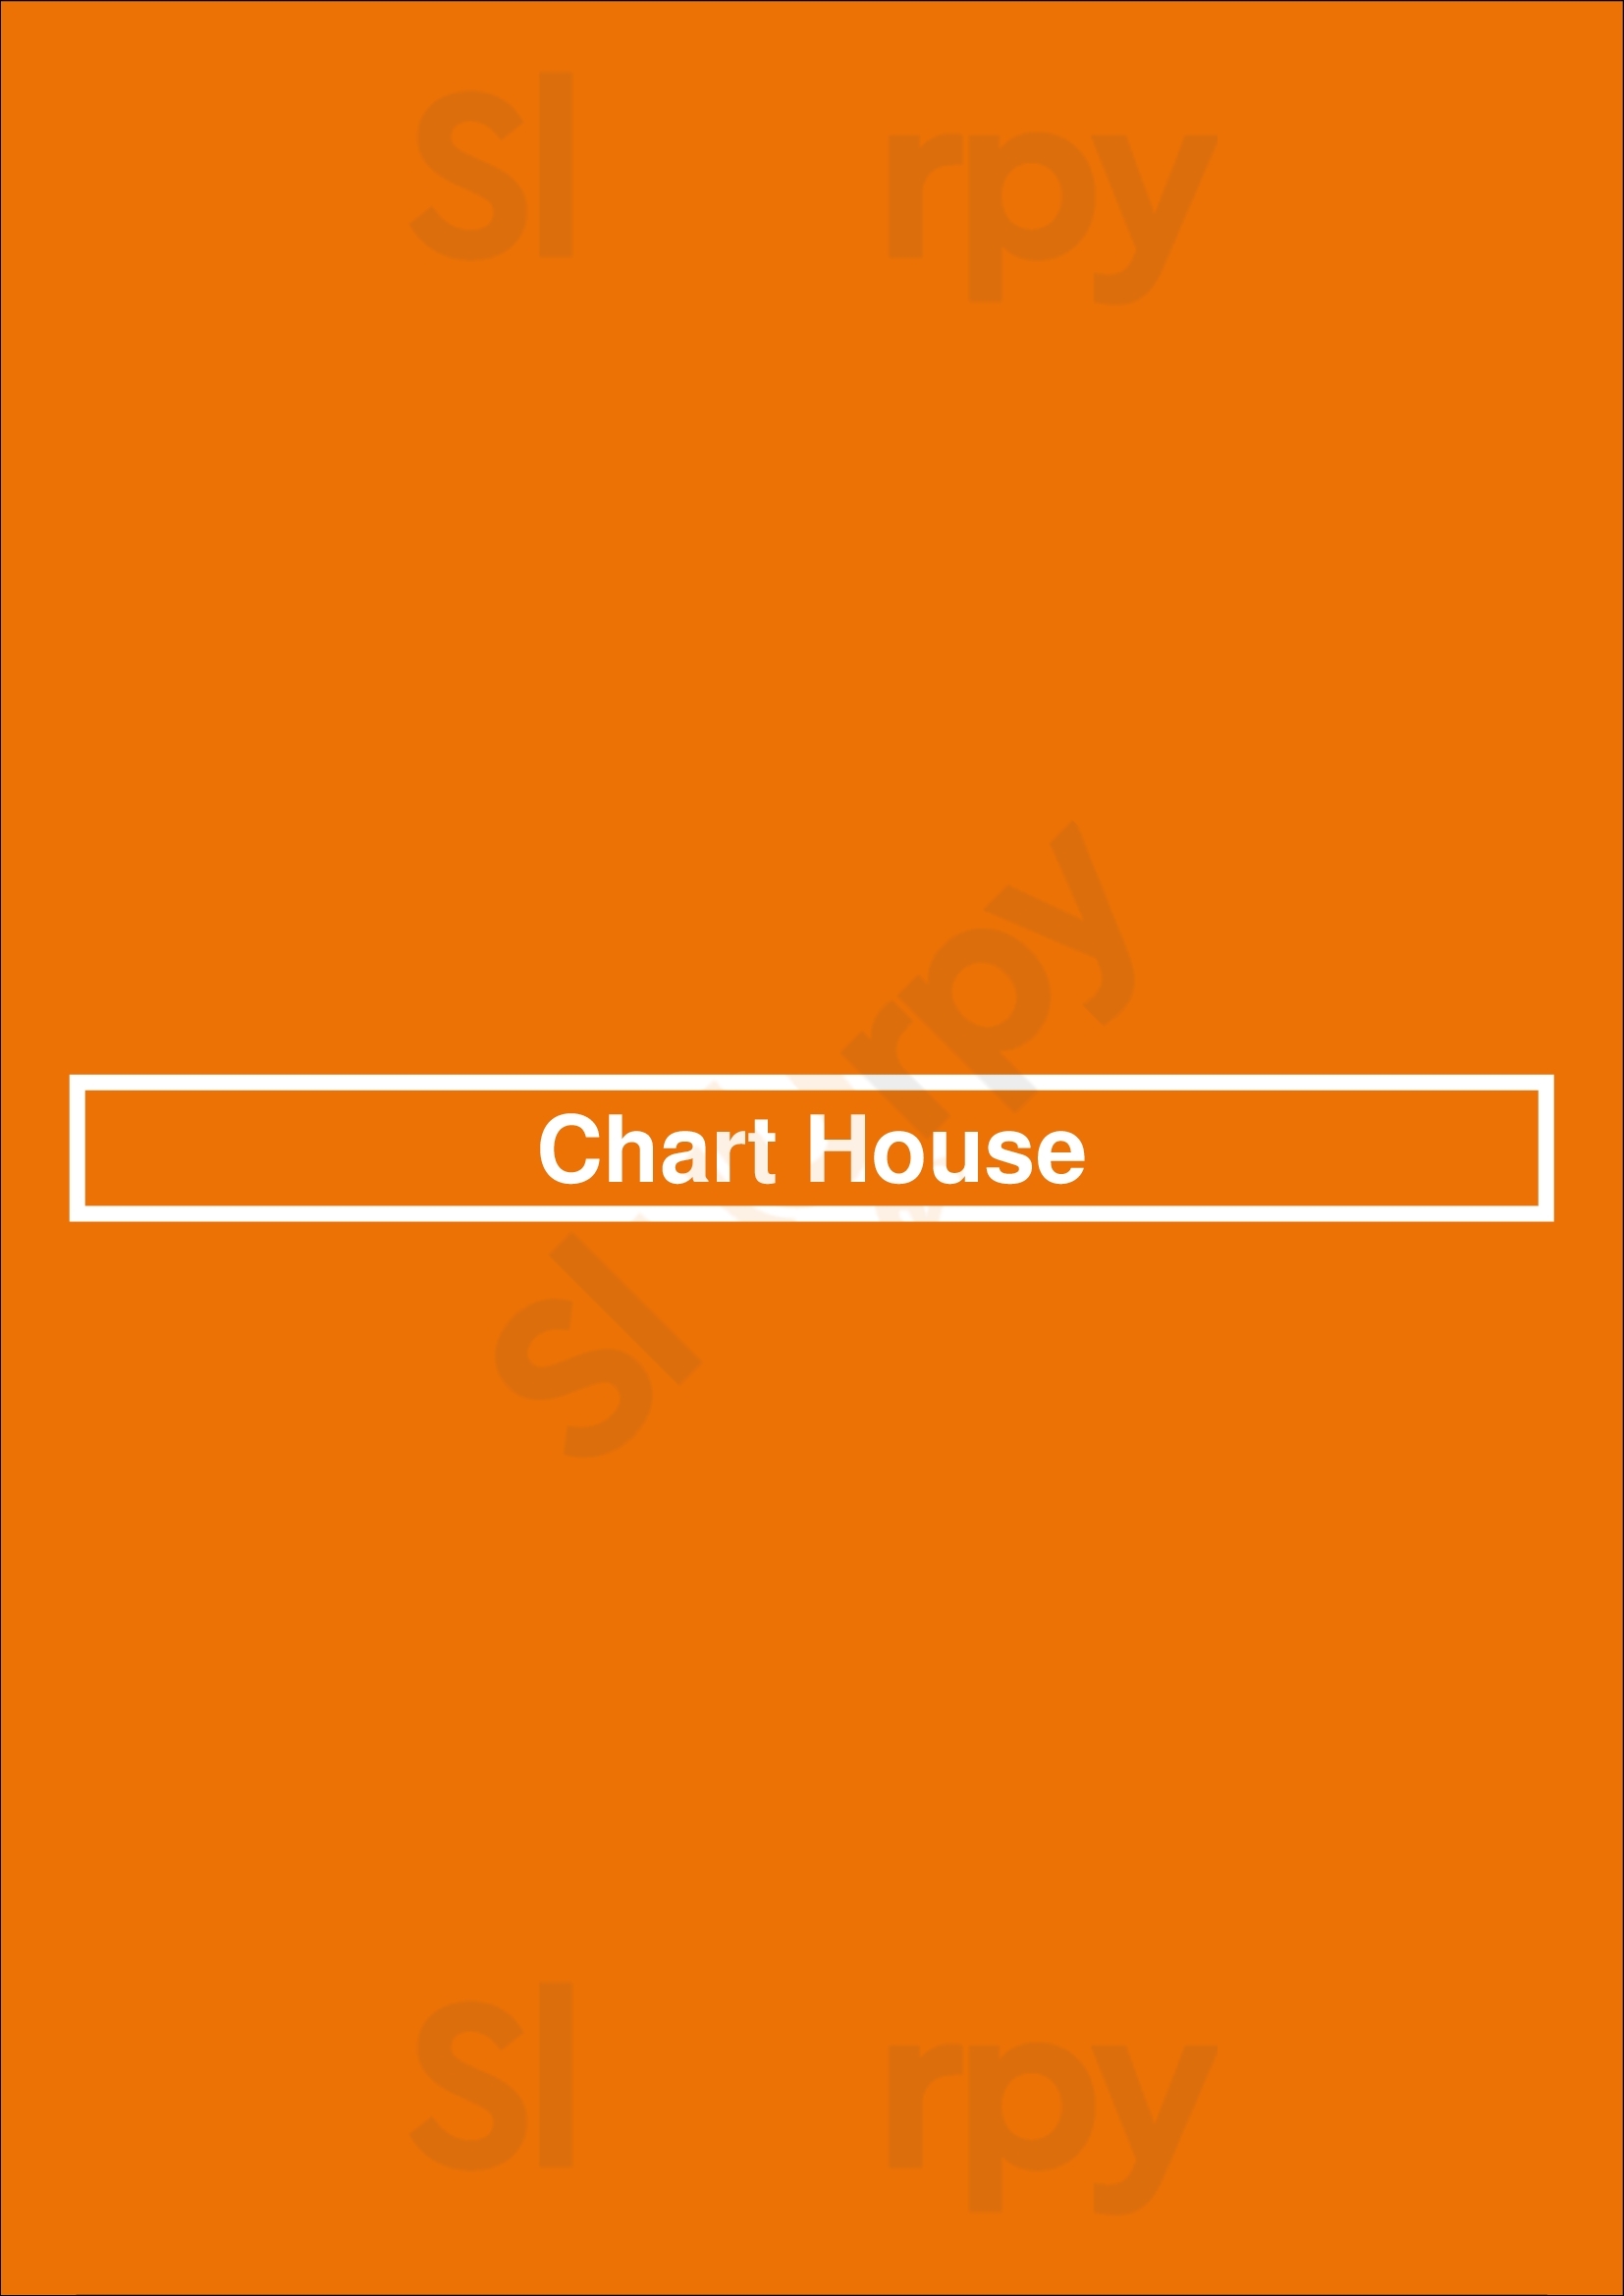 Chart House Scottsdale Menu - 1